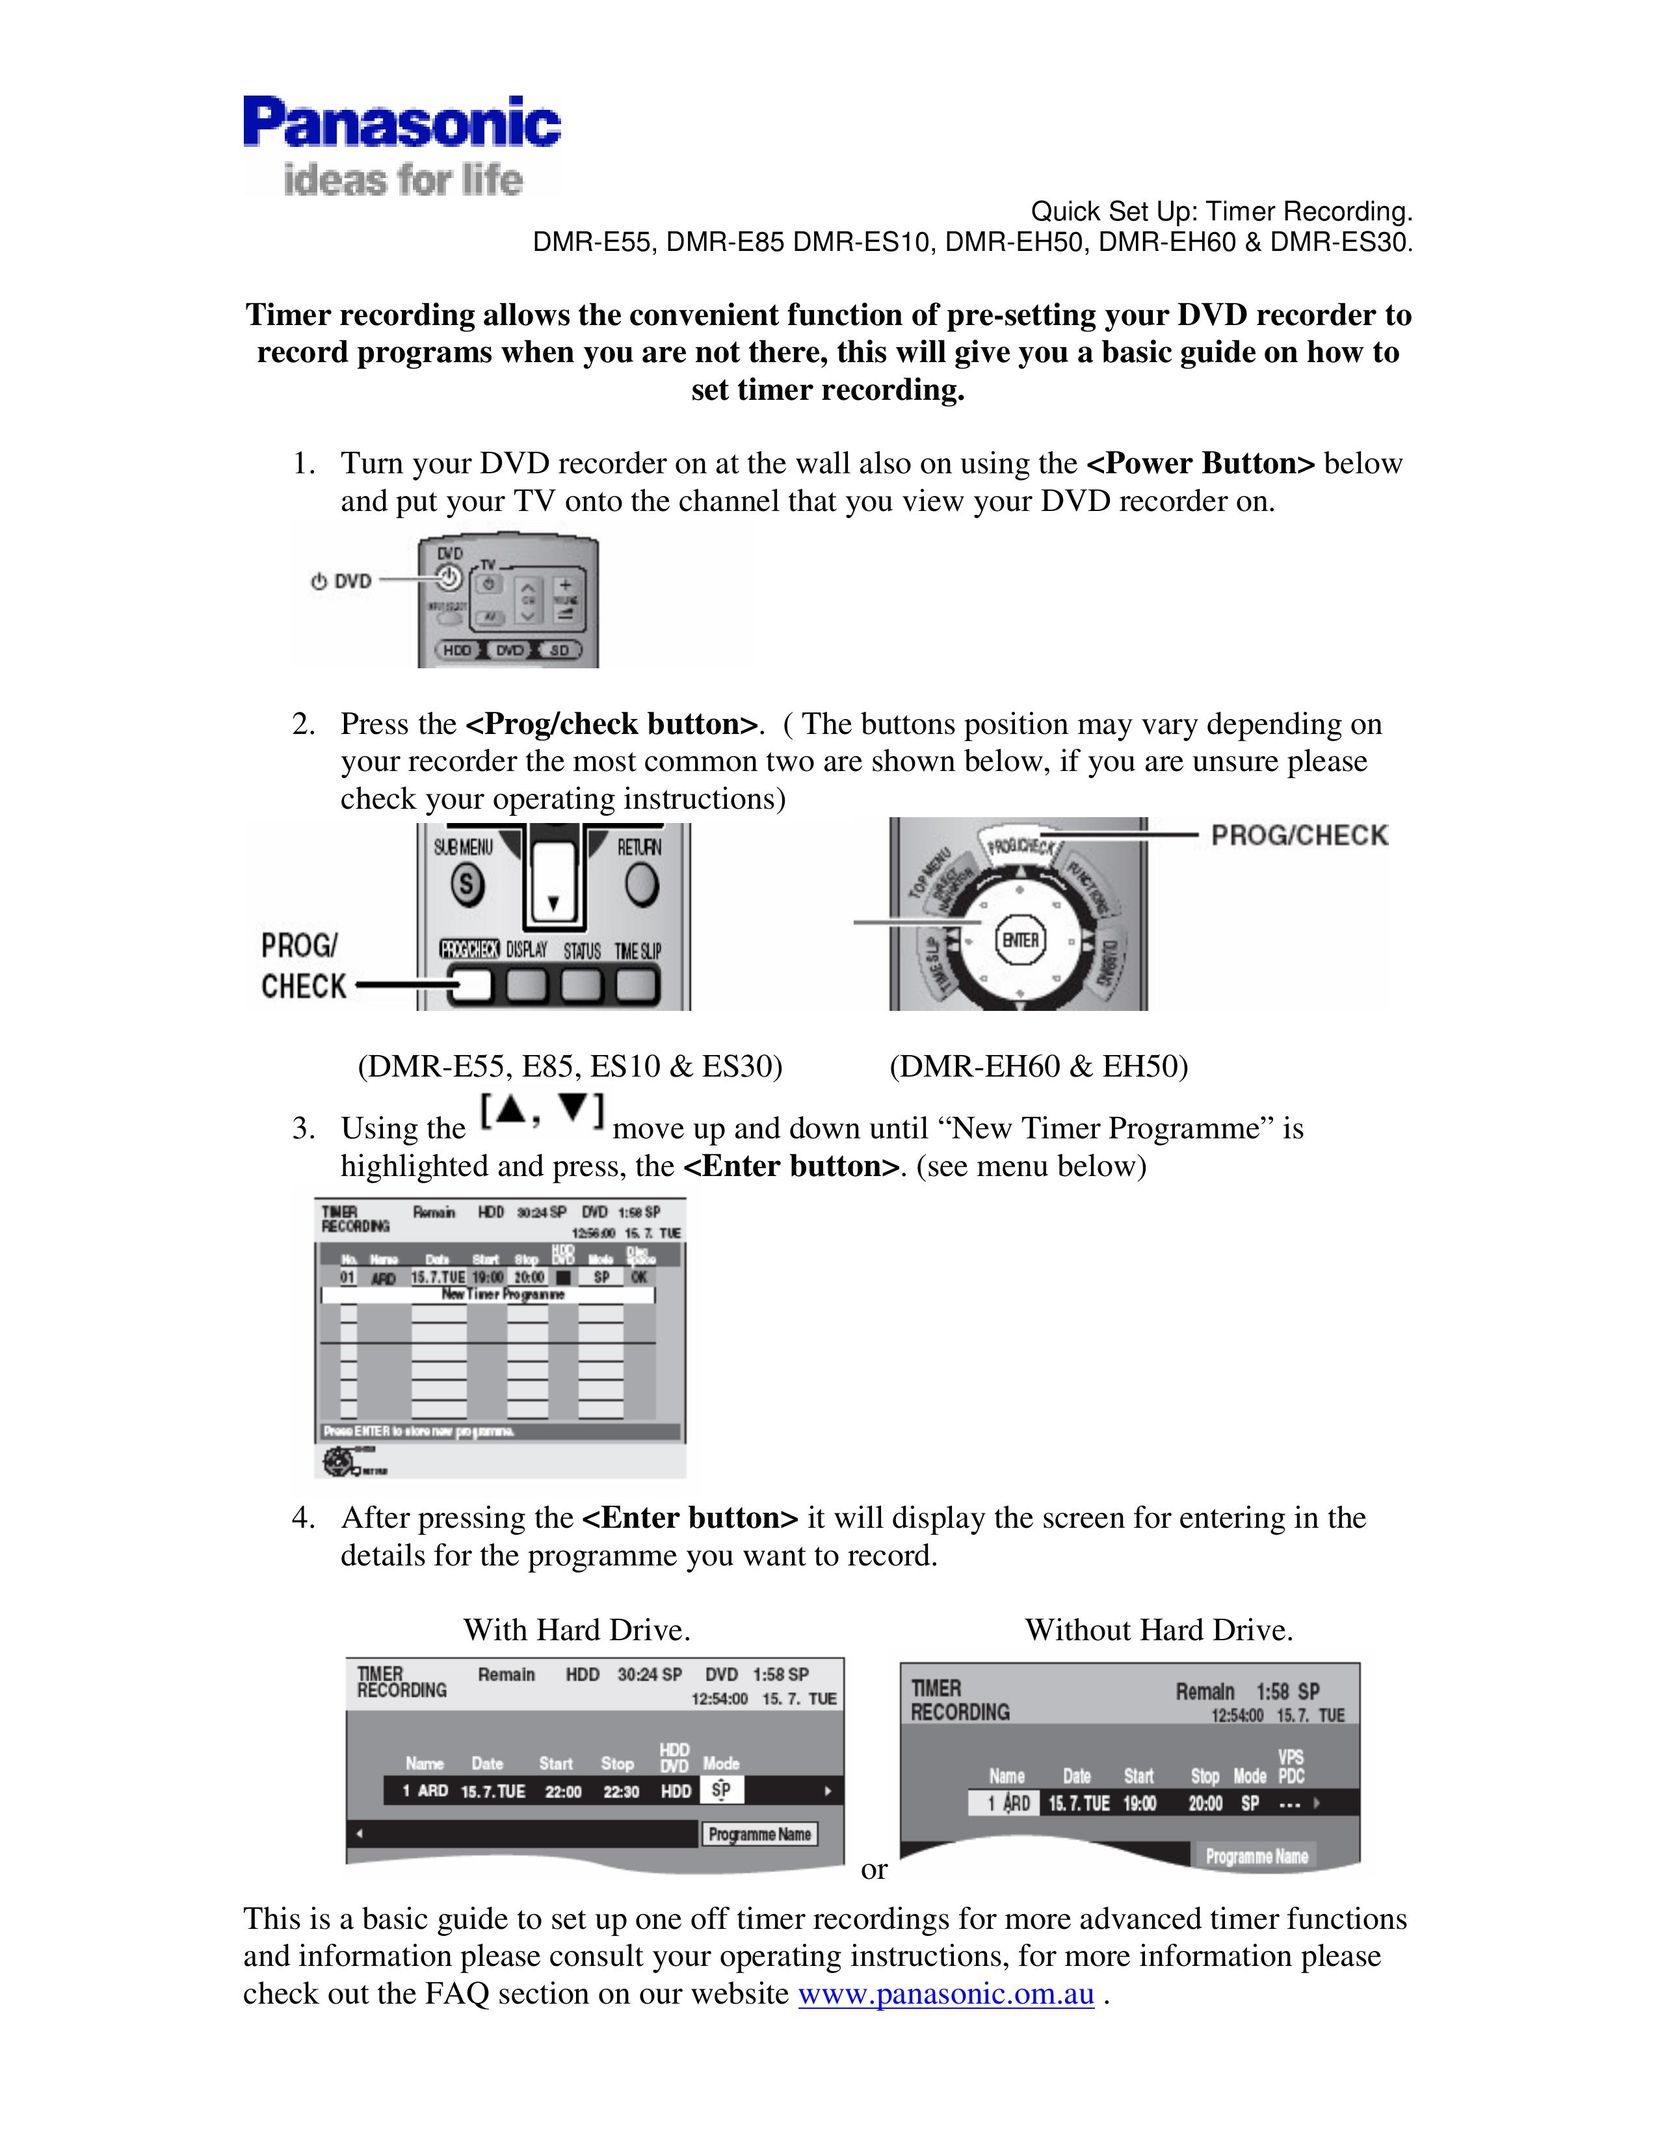 Panasonic DMR-E85 MP3 Player User Manual